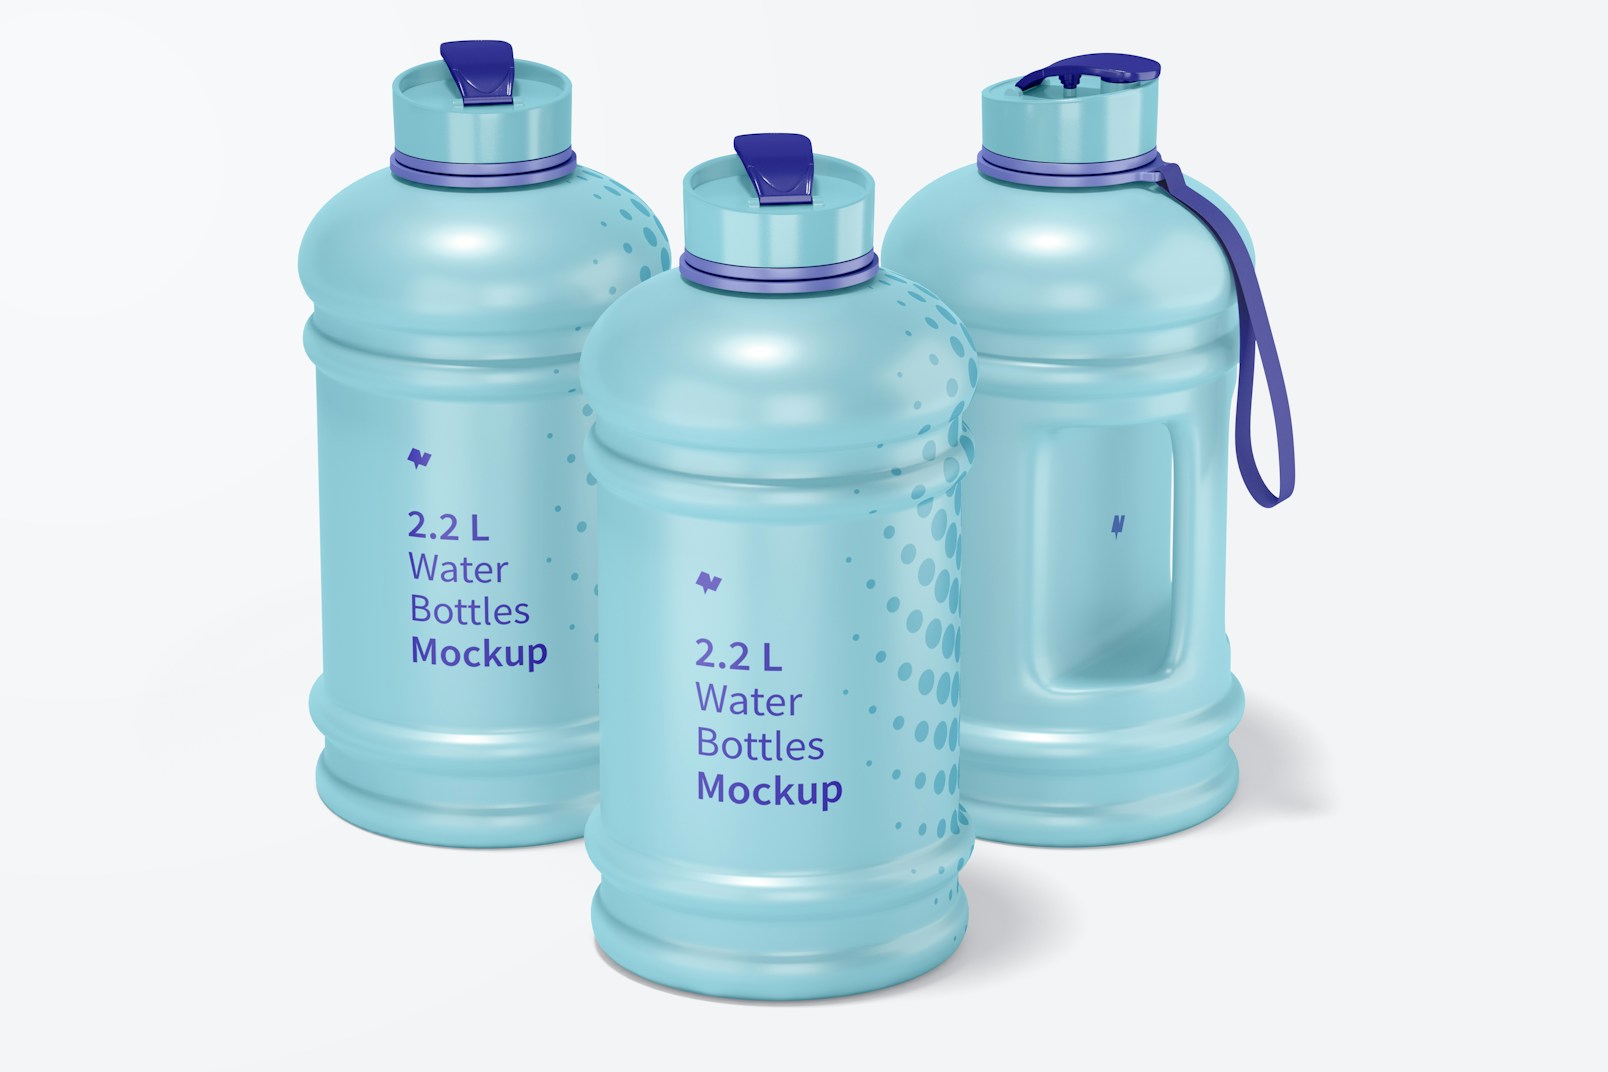 Maqueta de Botellas de Agua de 2.2 L, Vista Frontal